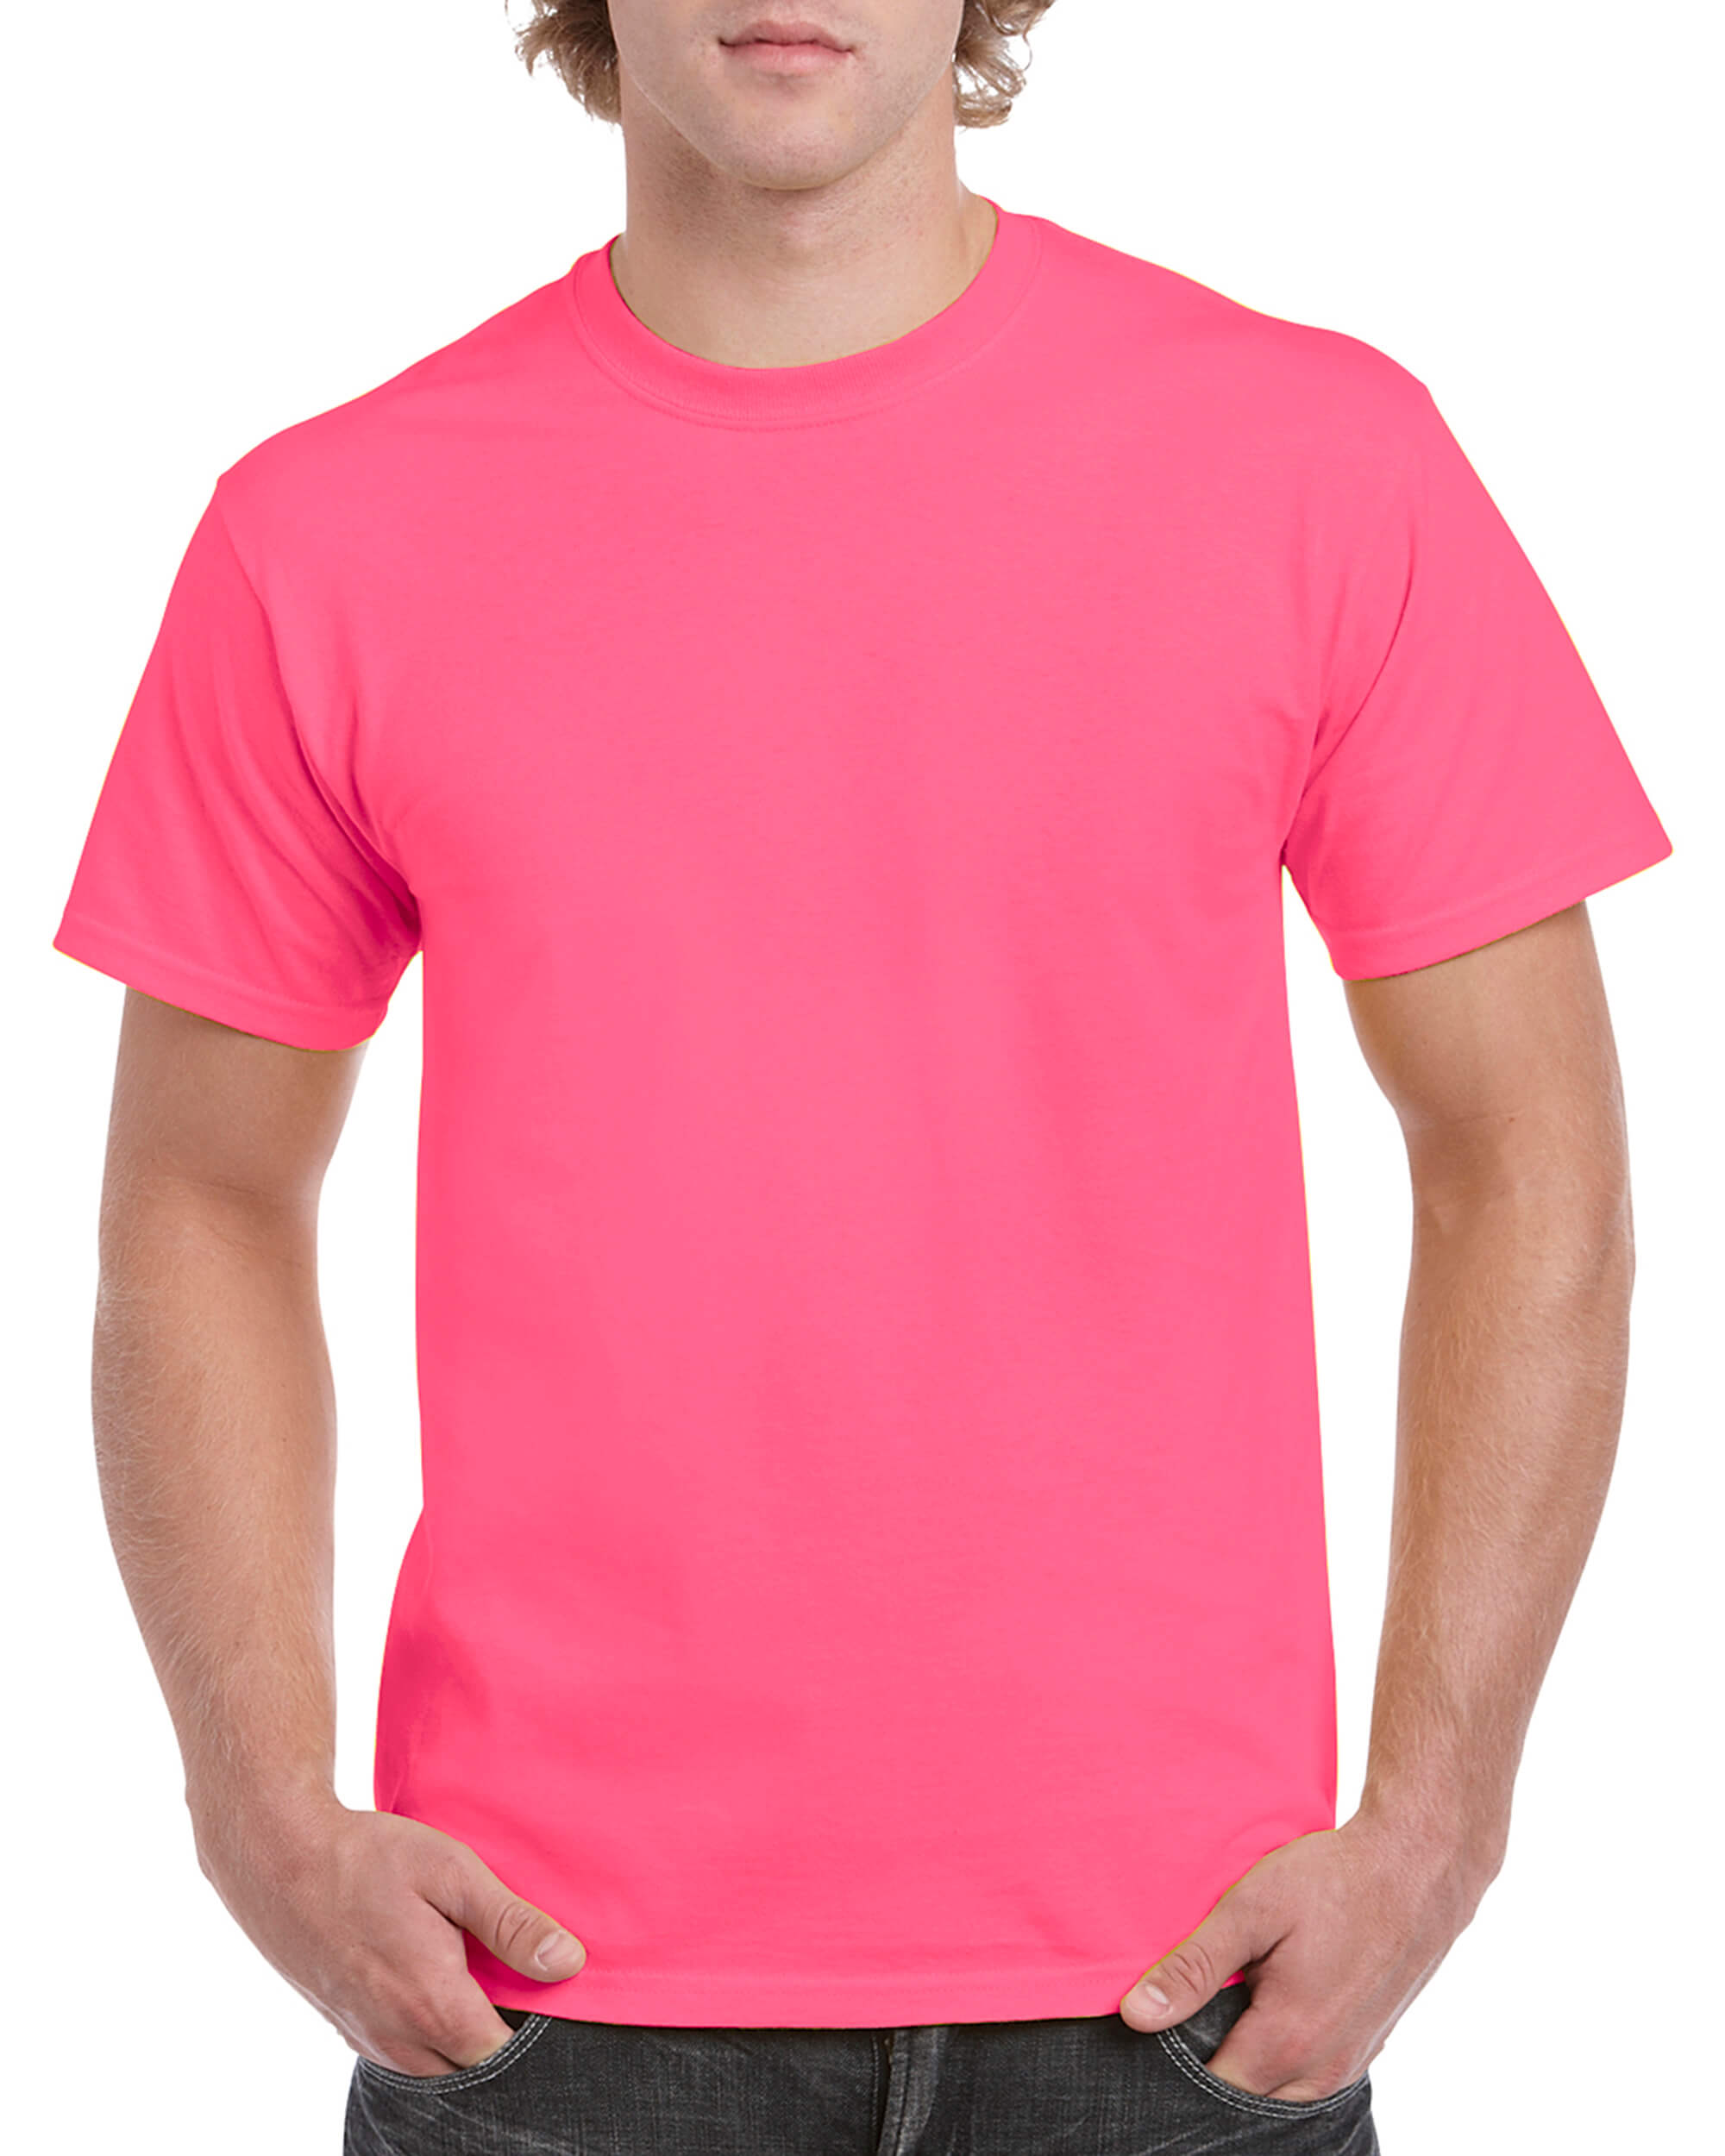 T-Shirt - Safety Pink